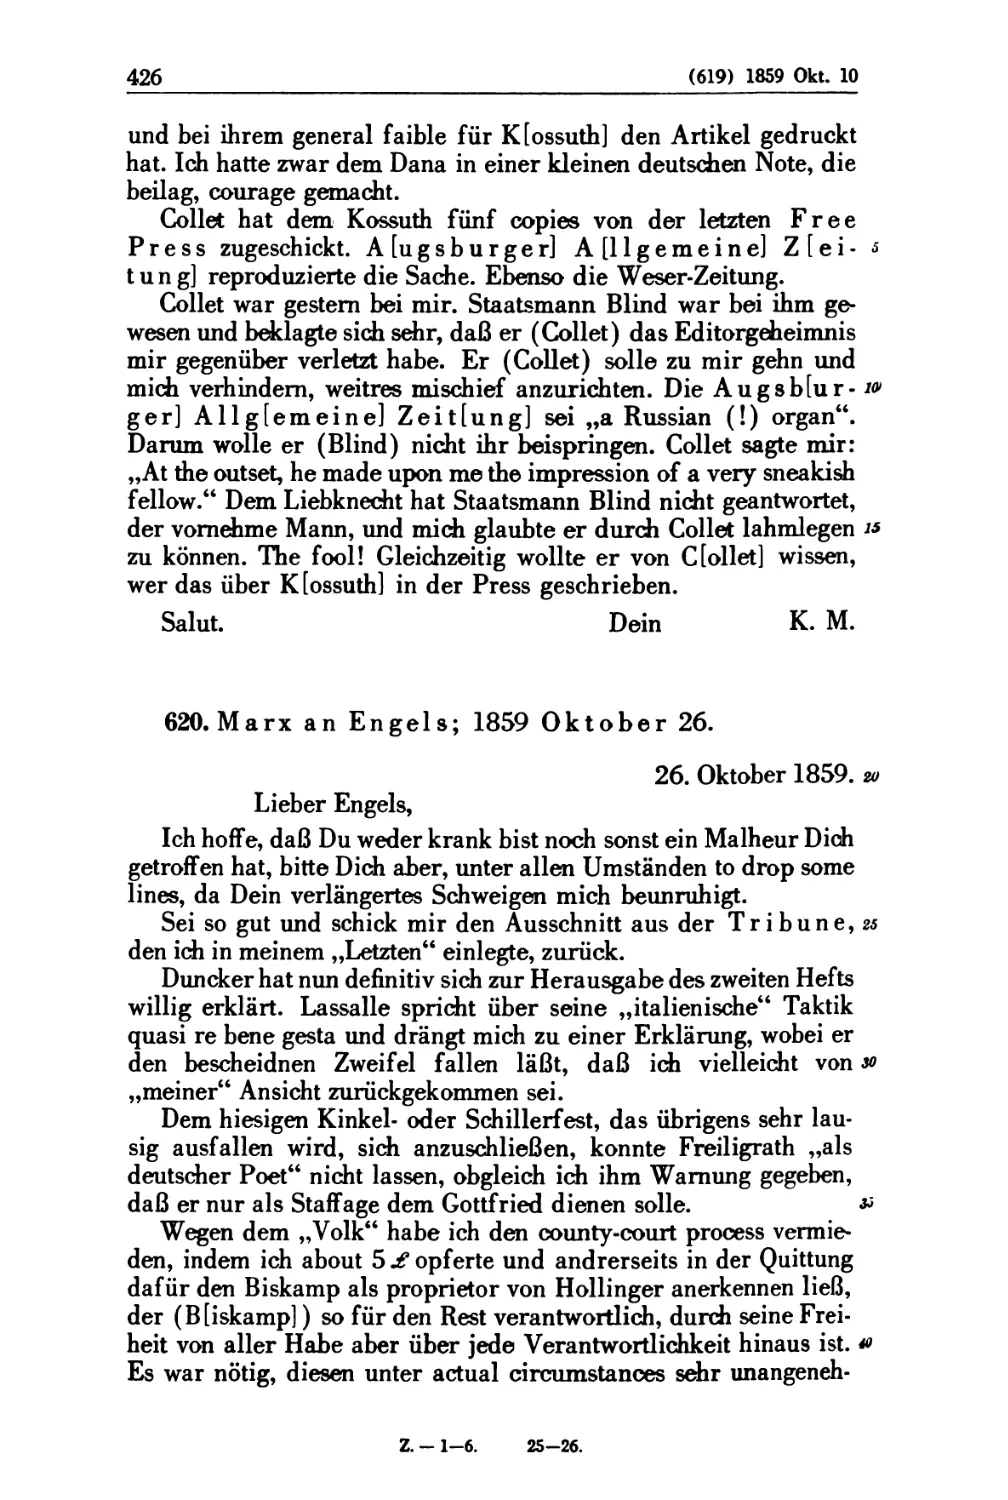 620. Marx an Engels; 1859 Oktober 26